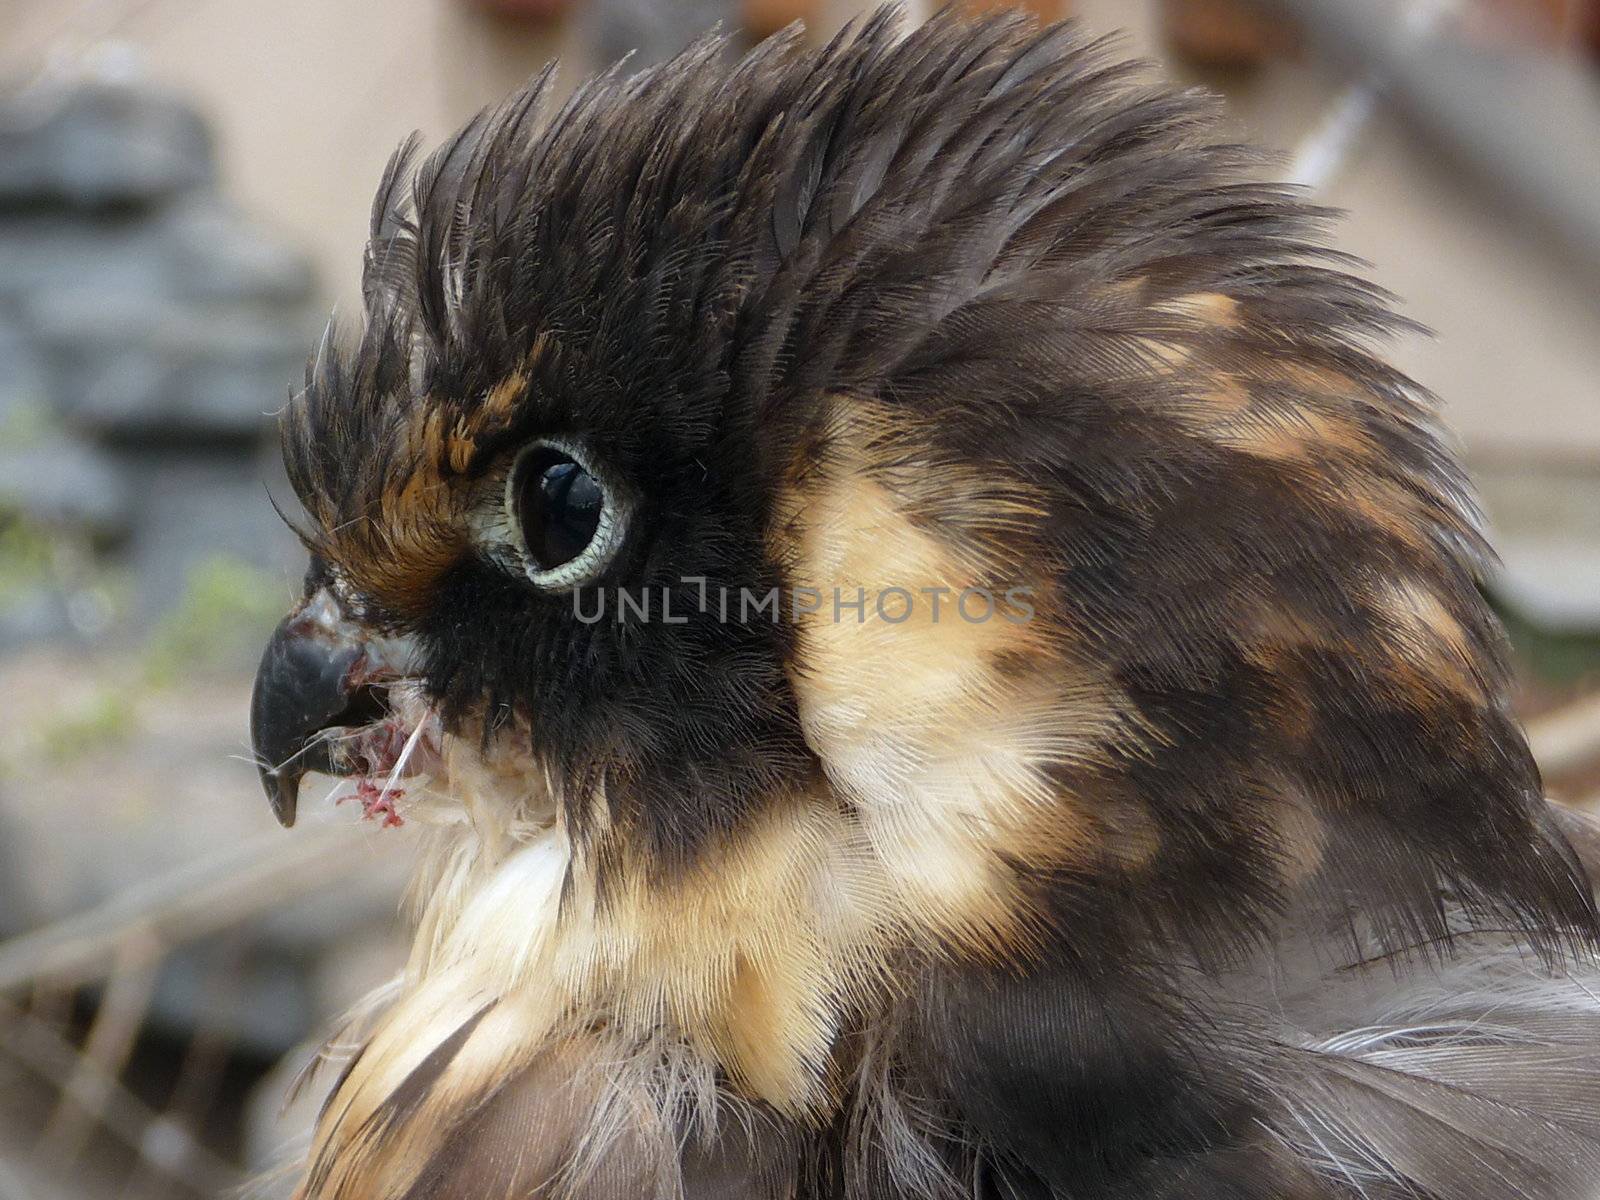 Nesting hawk by tomatto